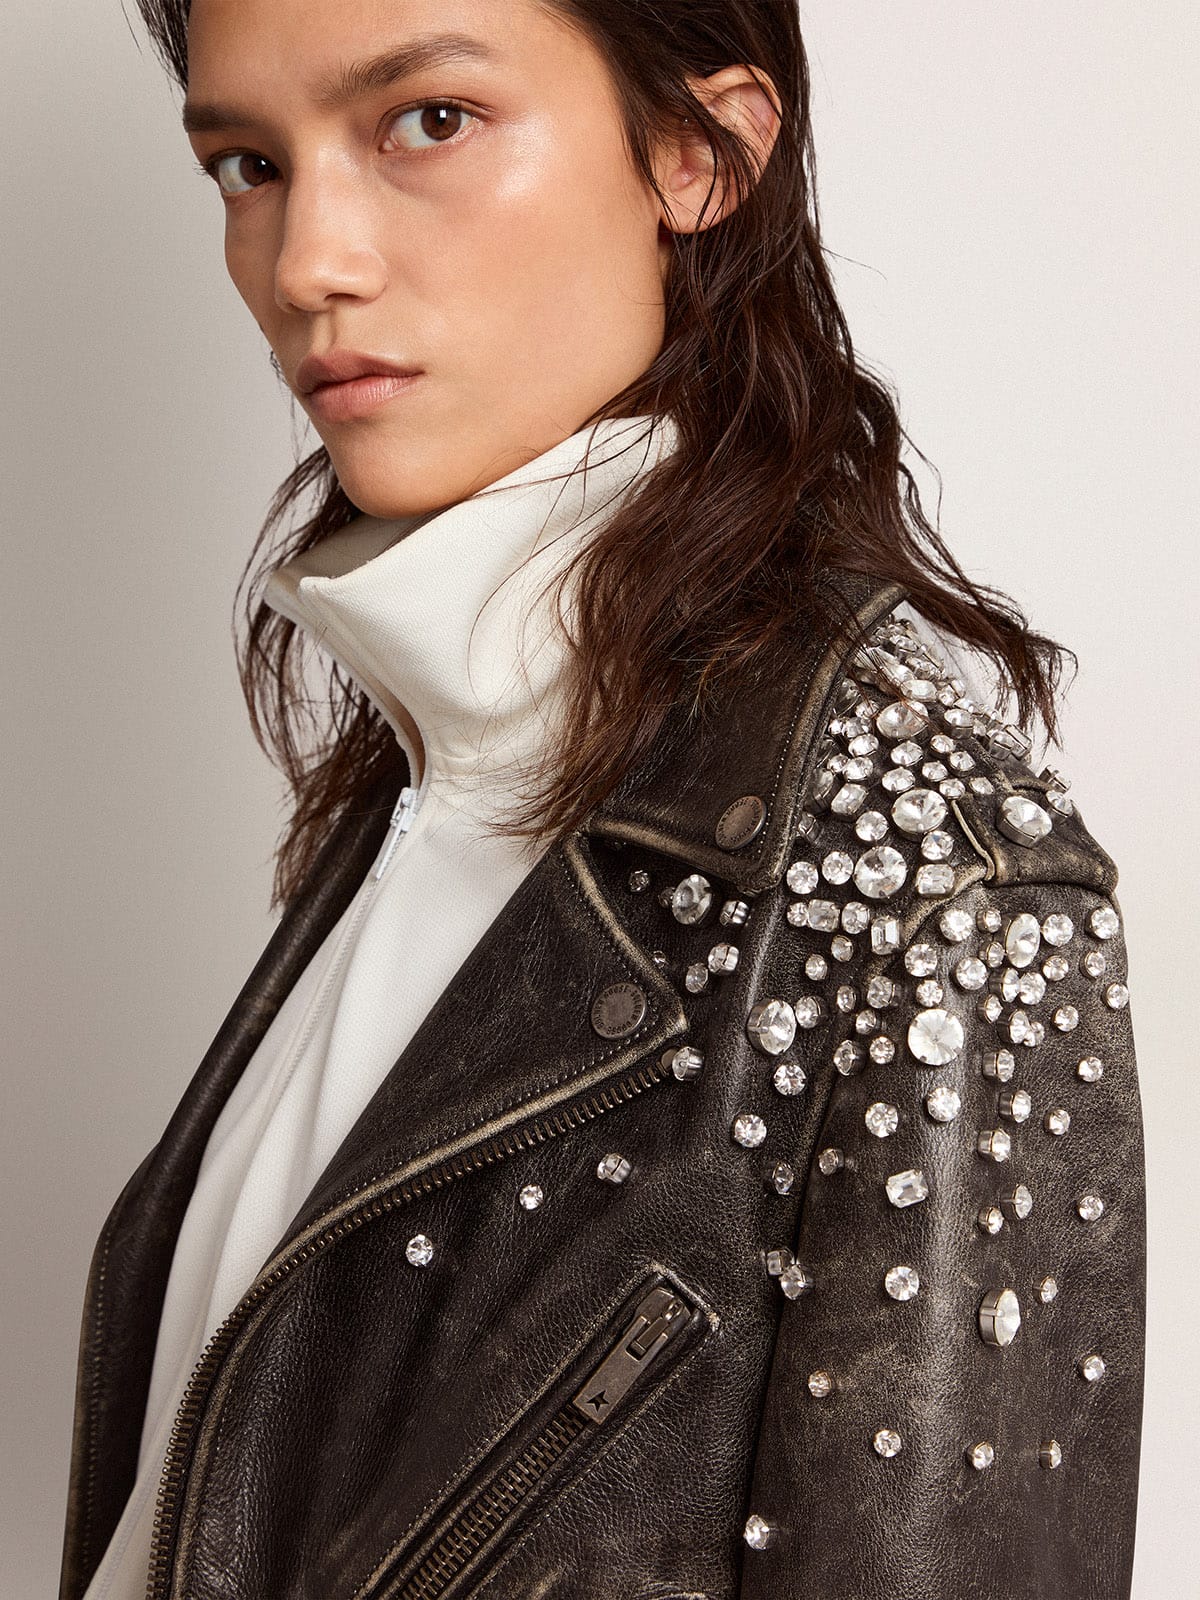 Women's leather biker jacket with crystals | Golden Goose